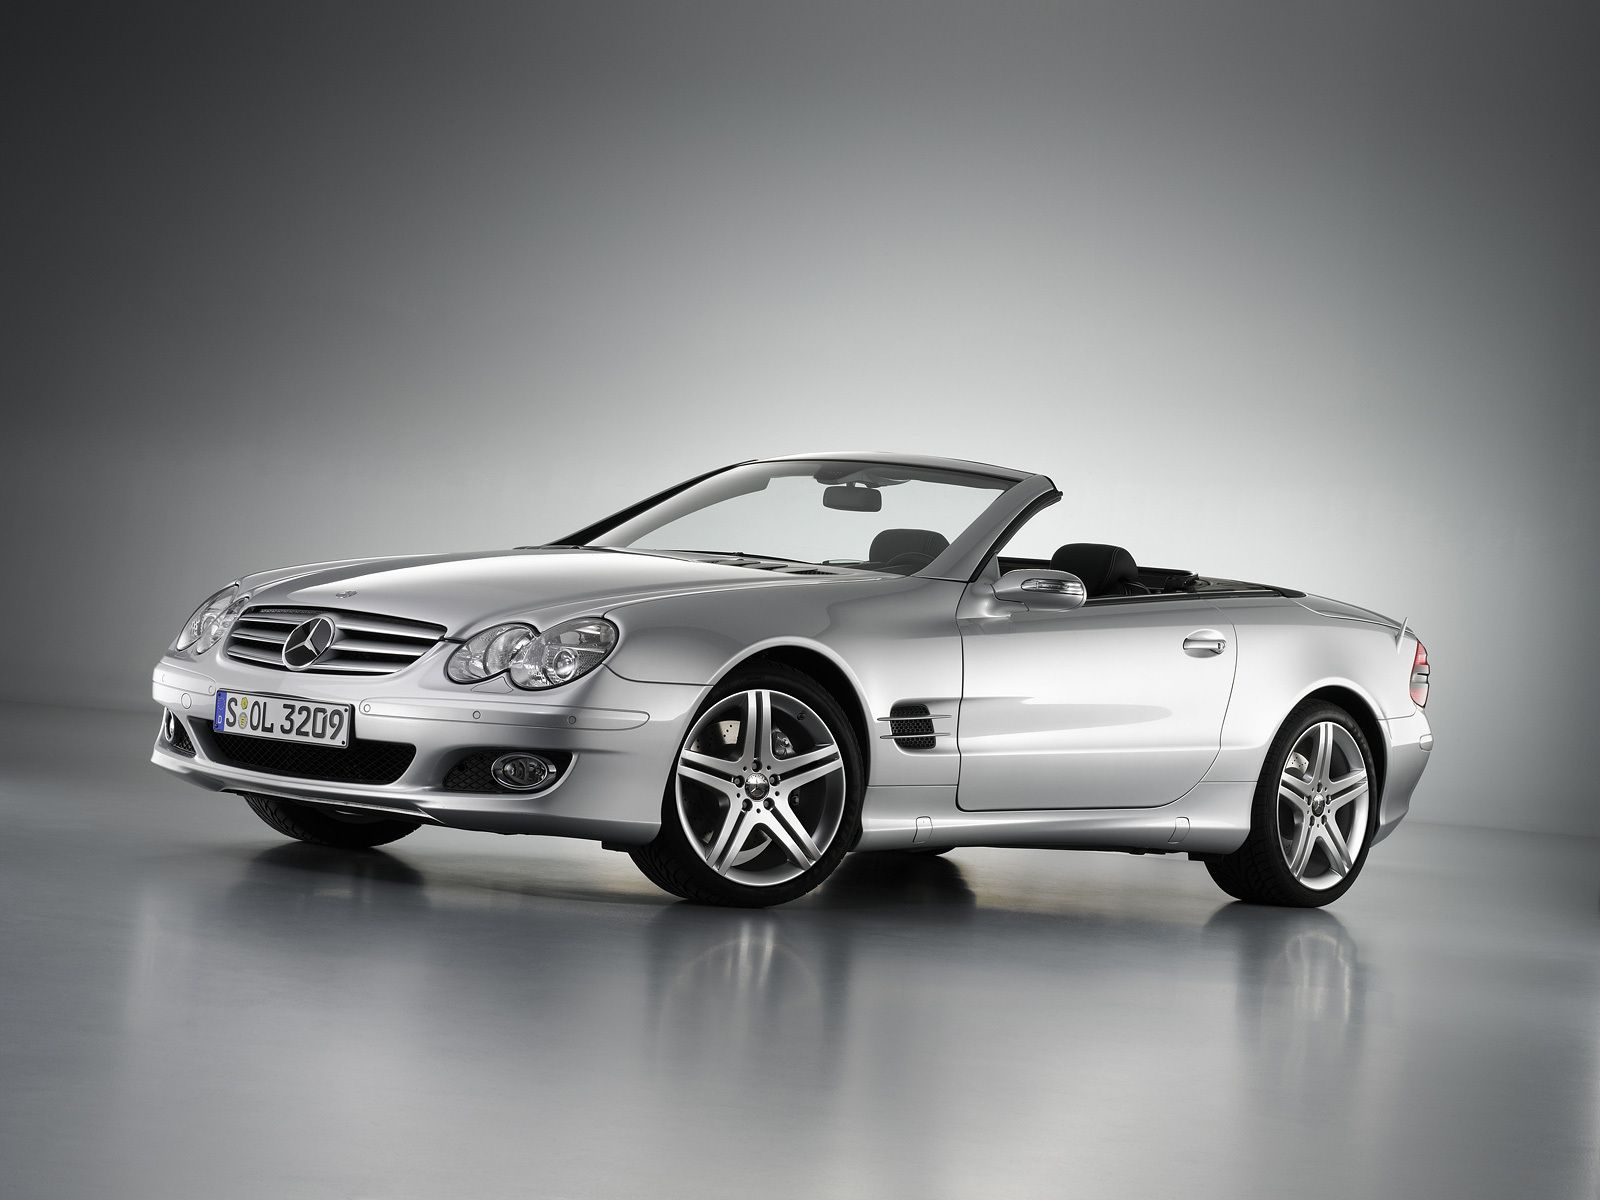 30 Top Class Luxurious Car Backgrounds